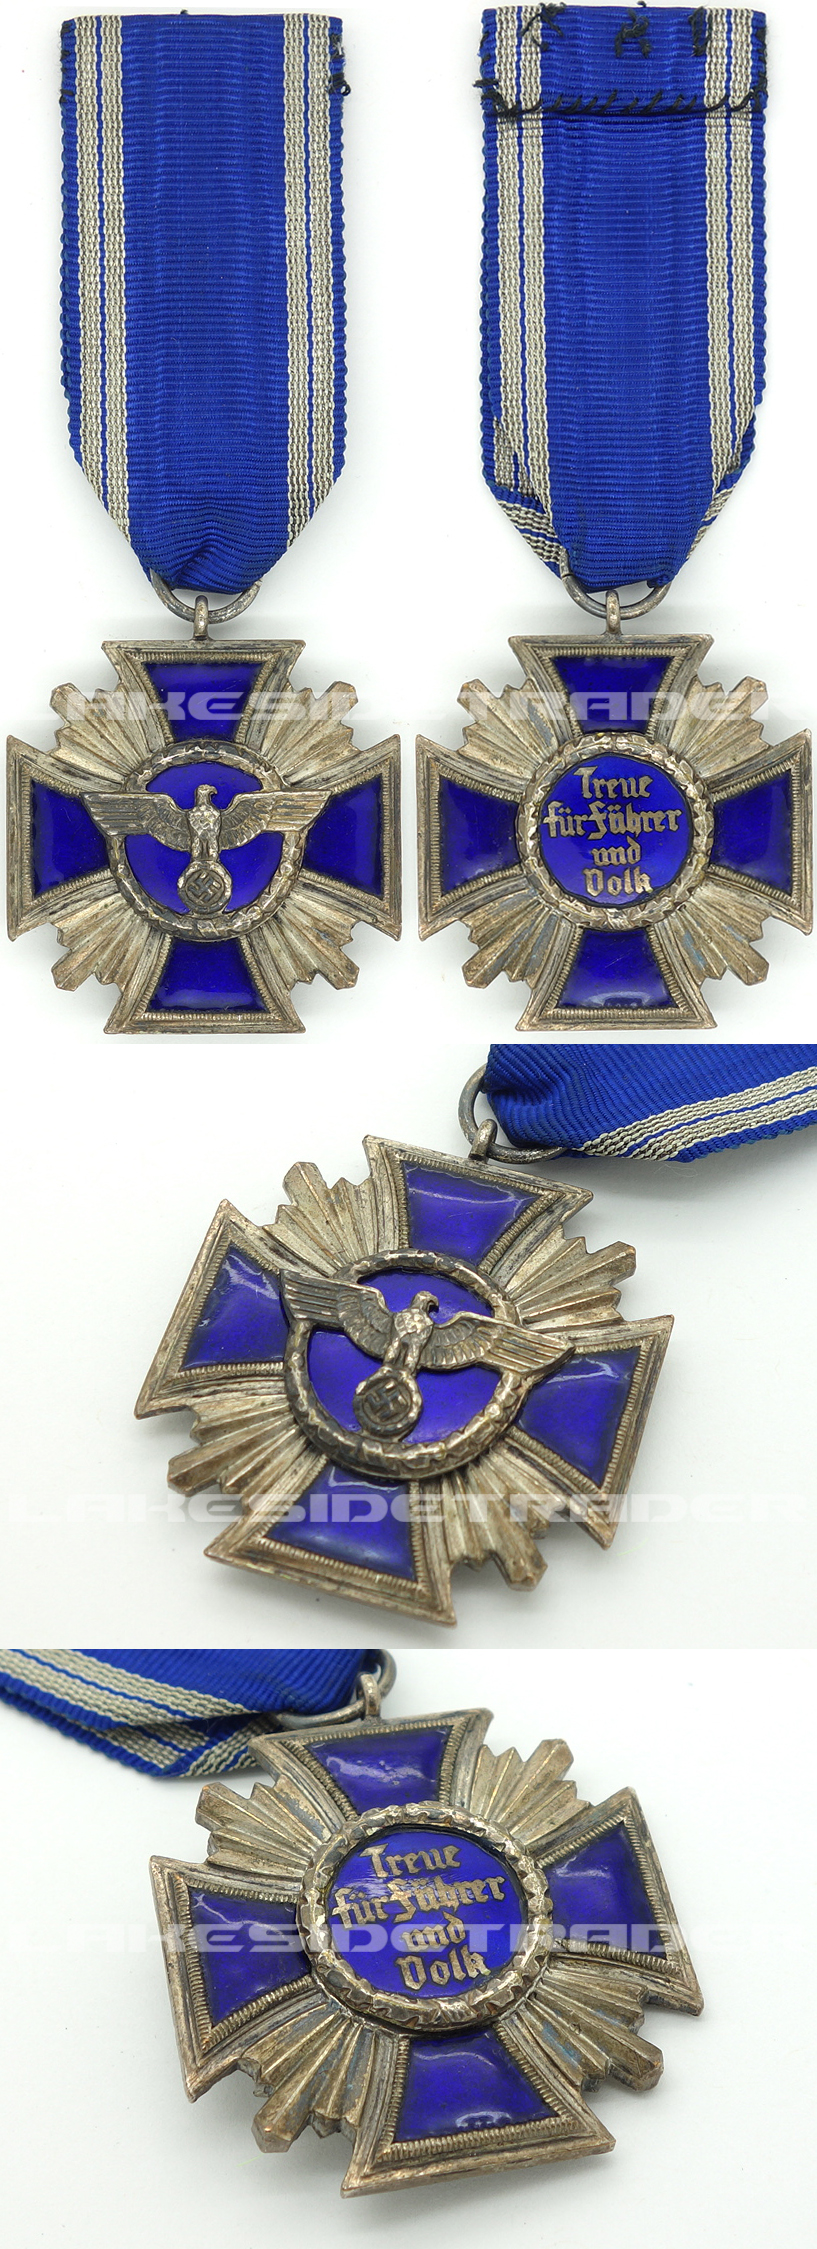 NSDAP 15 Year Long Service Award